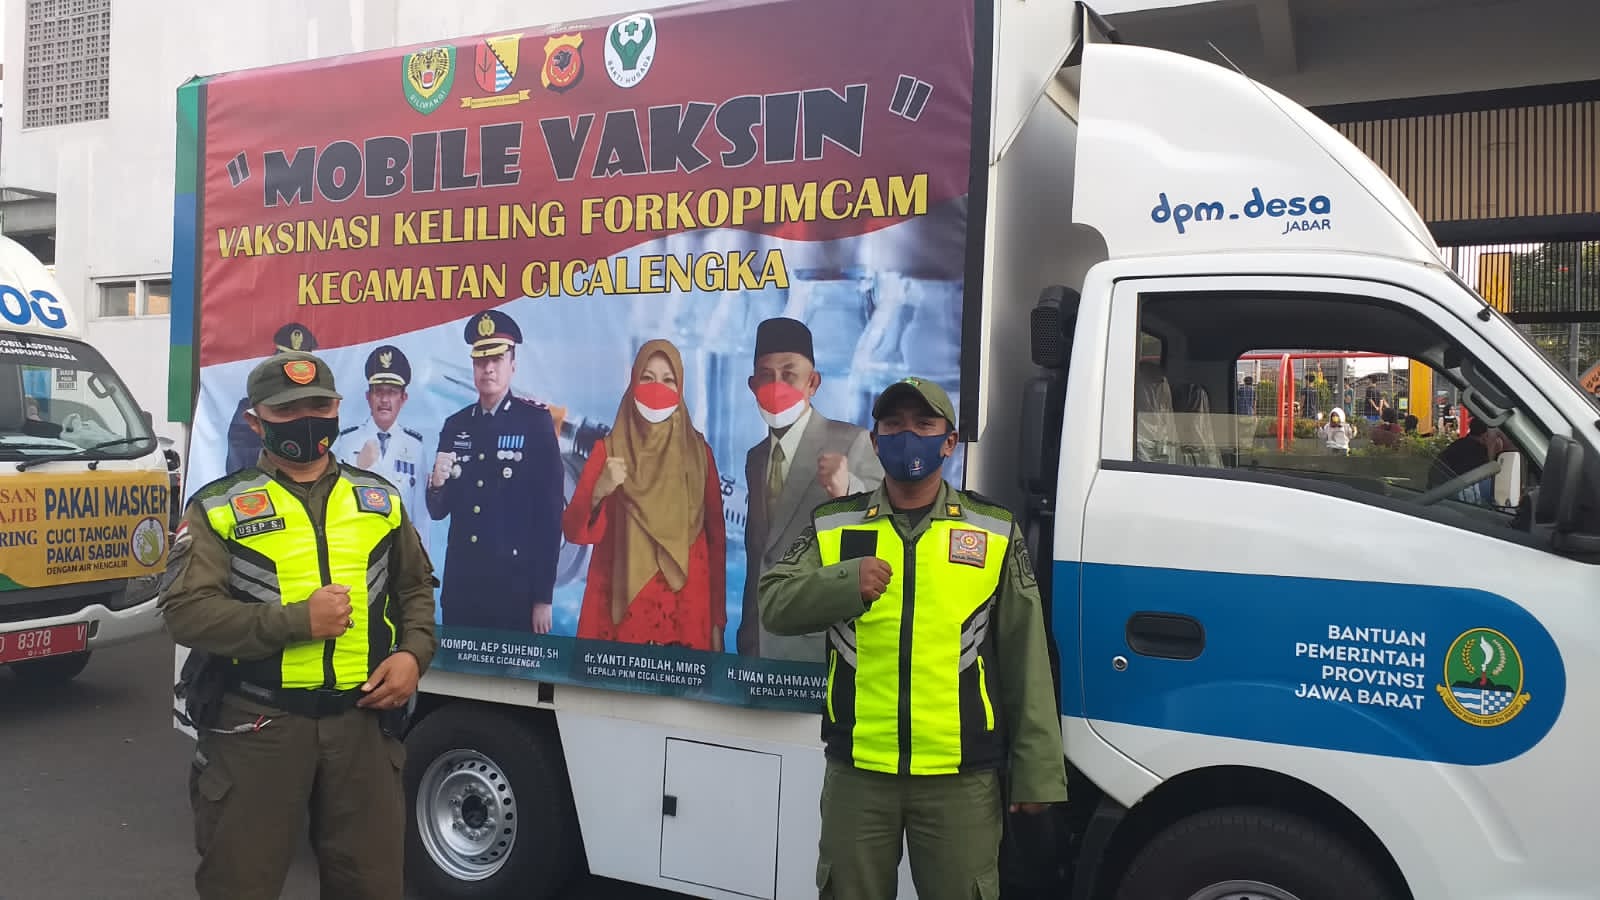 Mobile Vaksin milik Kecamatan Cicalengka, Kabupaten Bandung yang siap menjangkau warga hingga plosok untuk vaksinasi.